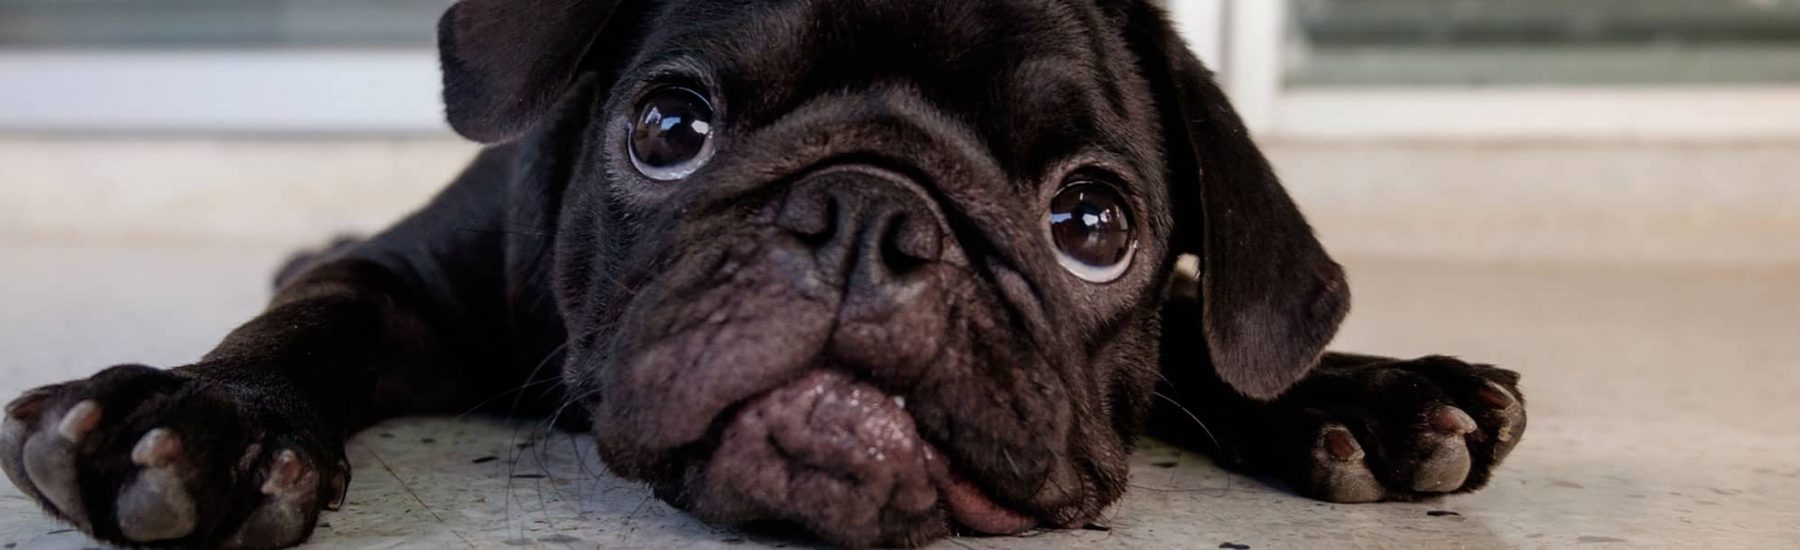 Close up of a black pug dog looking sad